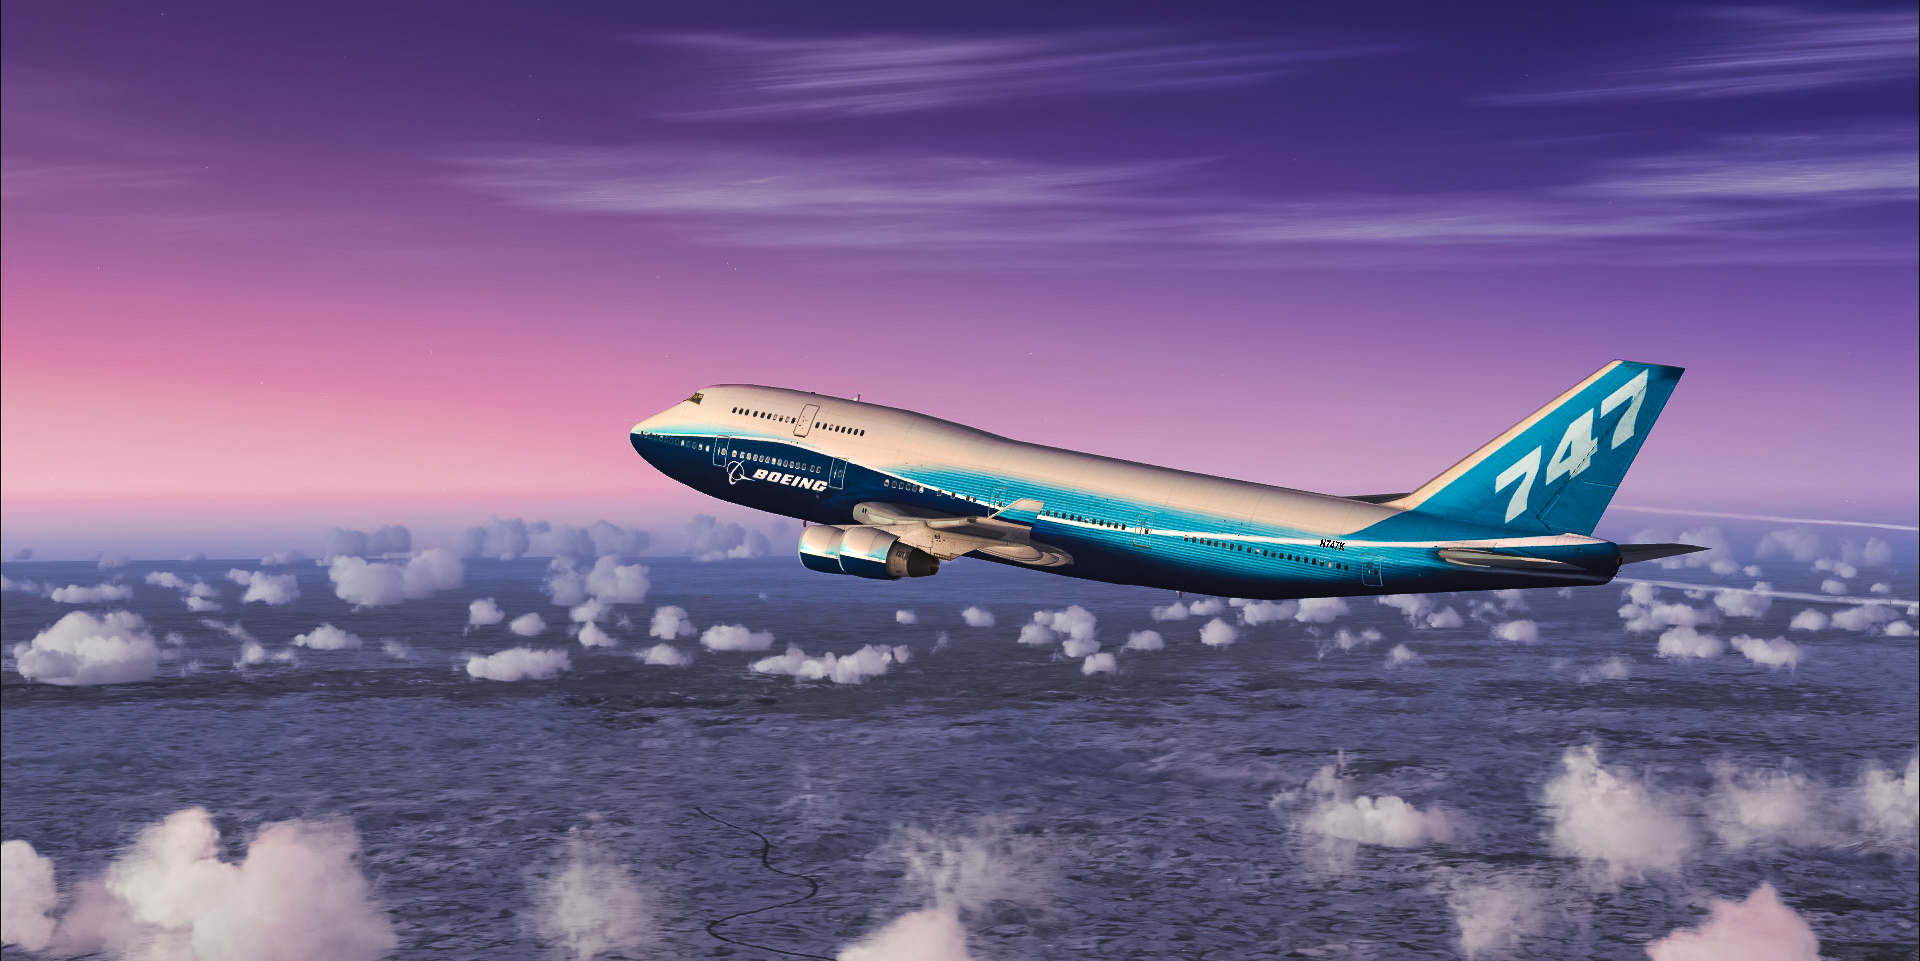 General 1920x961 Boeing Boeing 747 airplane clouds aircraft flight simulator screen shot